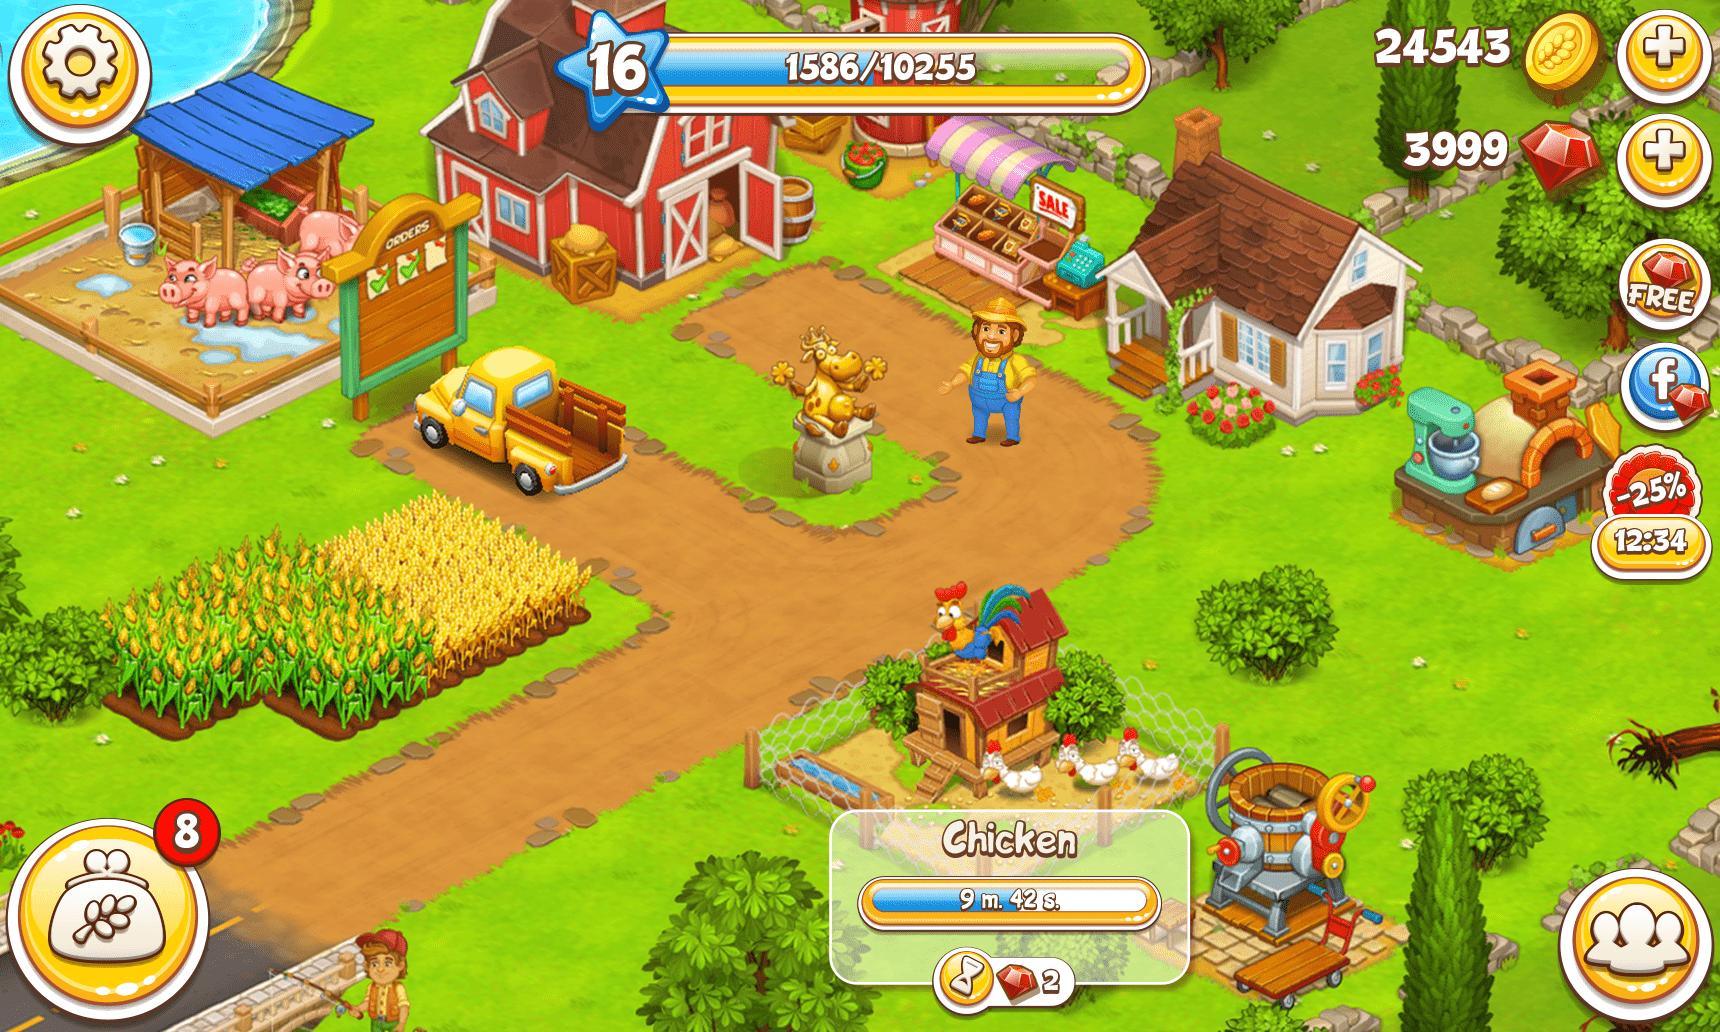 Farm Town: Happy village near small city and town 3.41 Screenshot 15